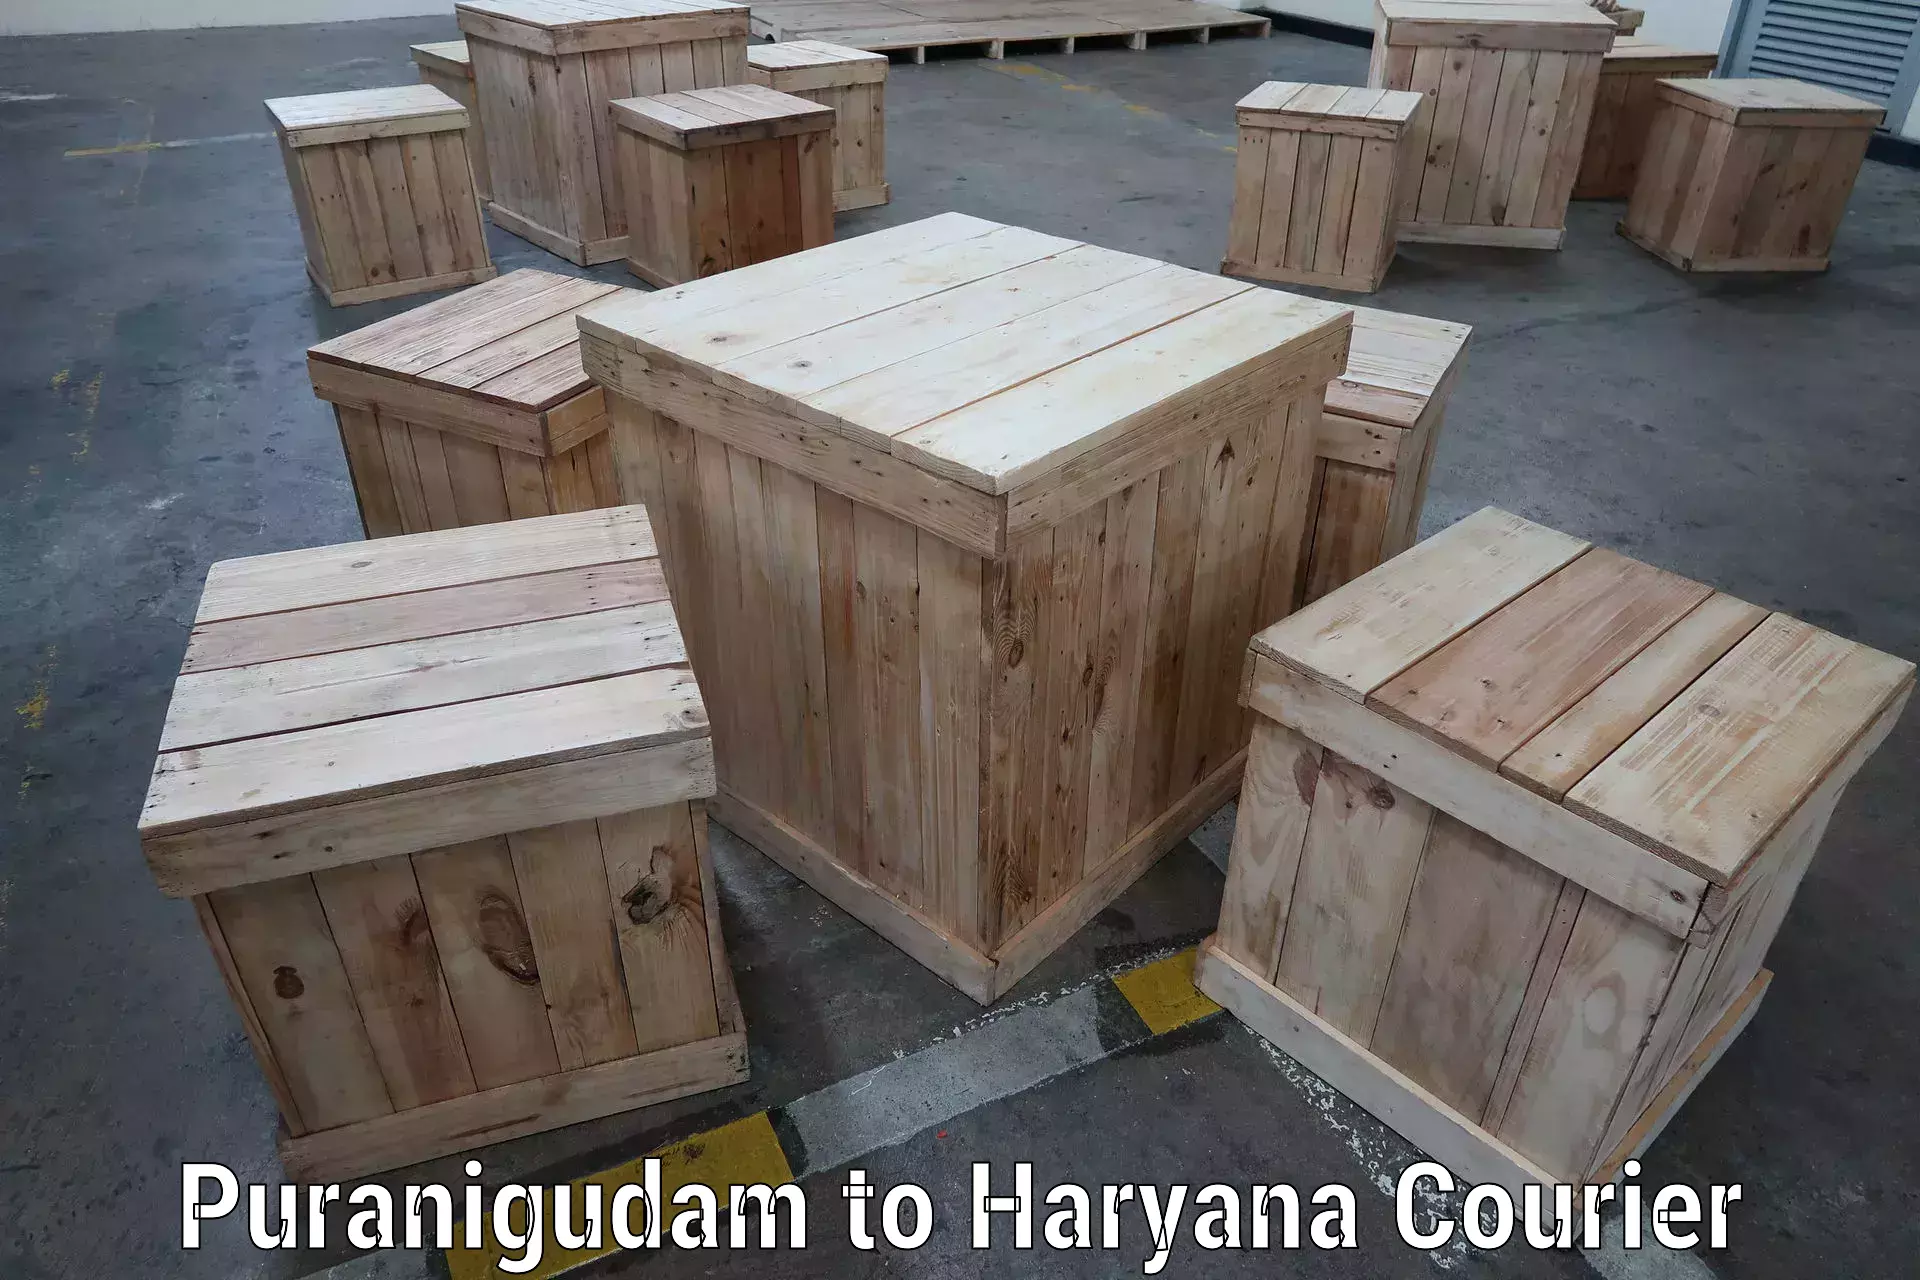 Global logistics network Puranigudam to Haryana